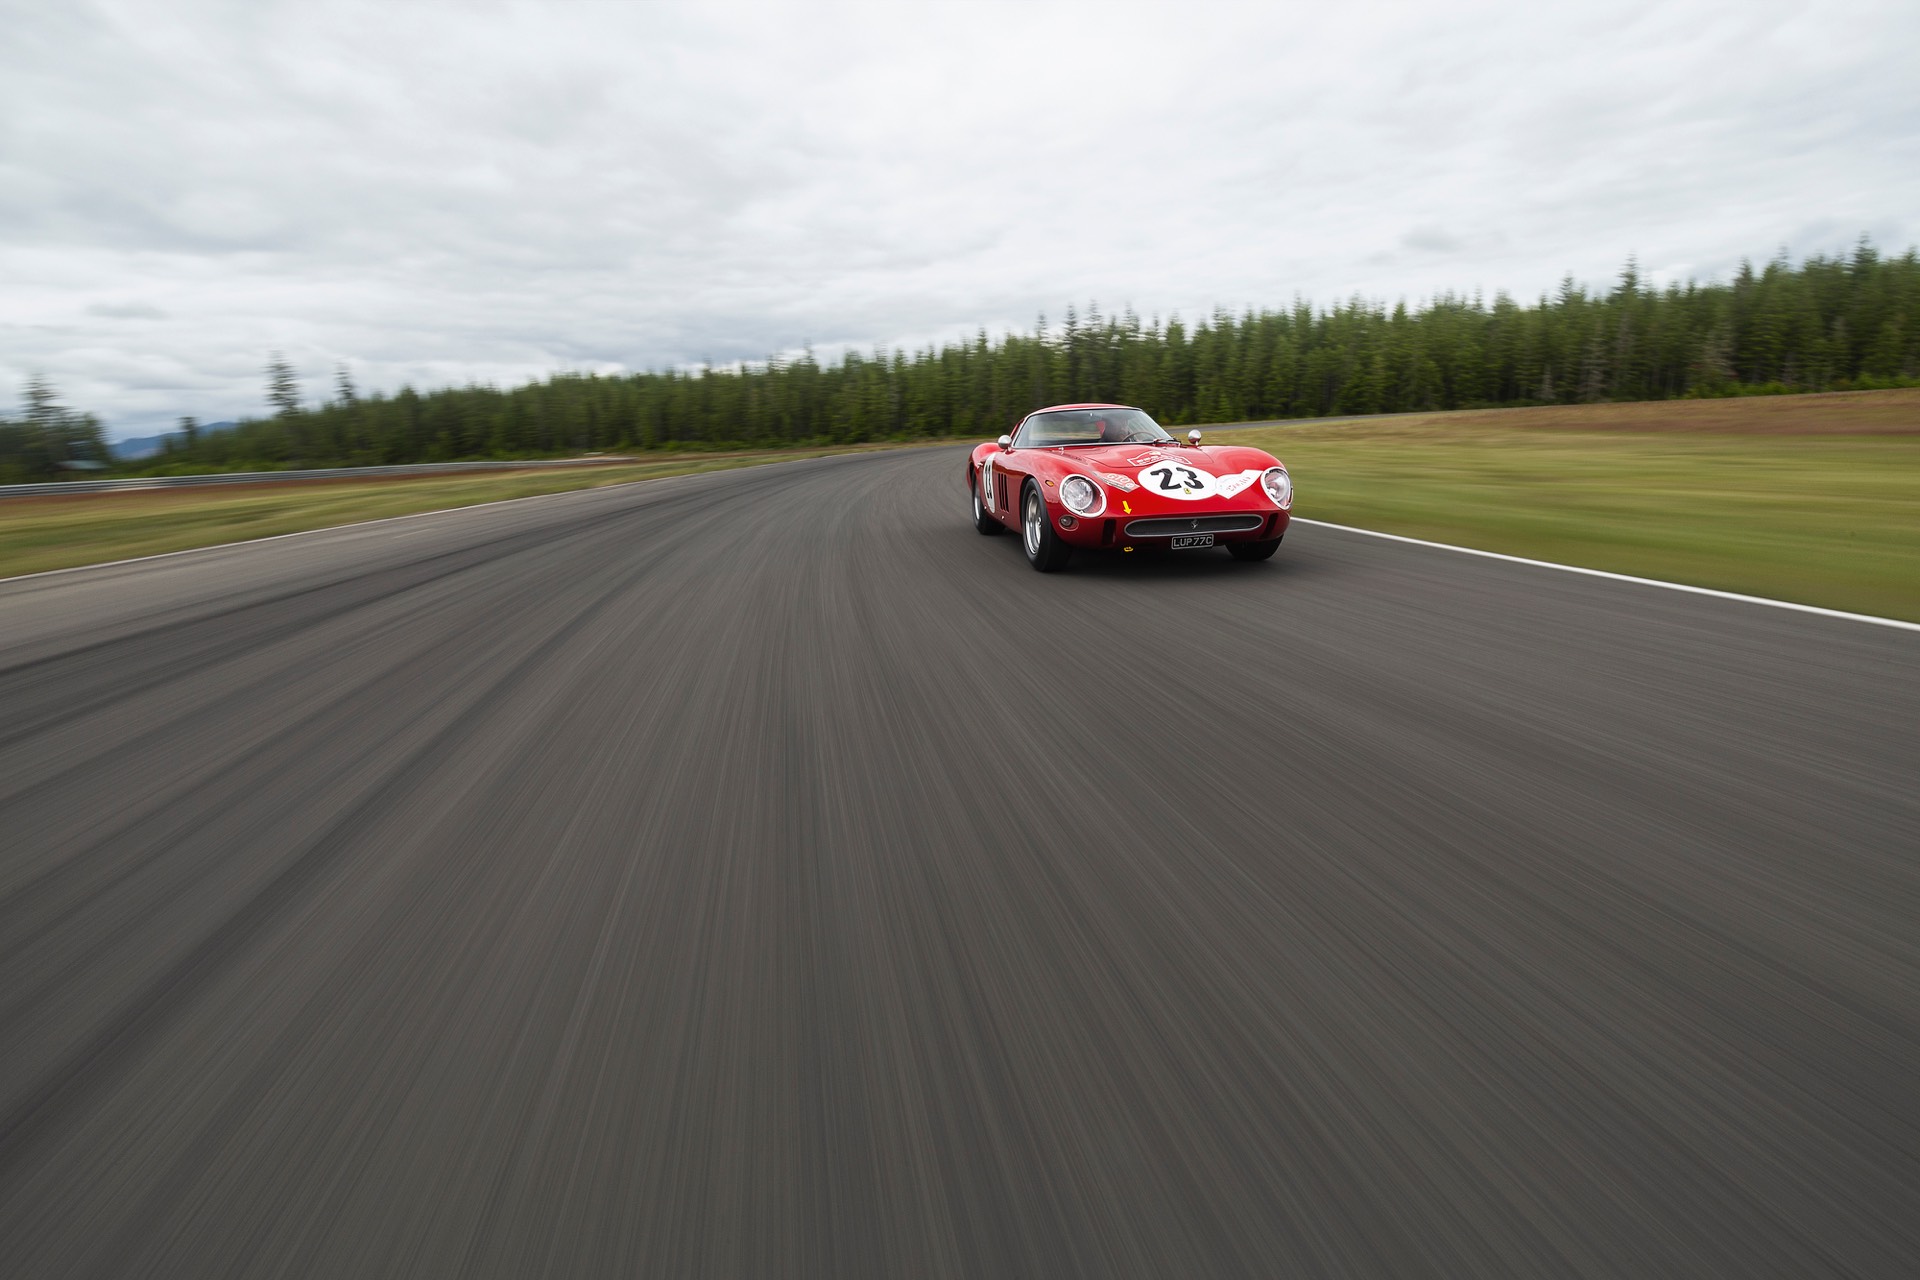 Ferrari 250 GTO RM Sothebys